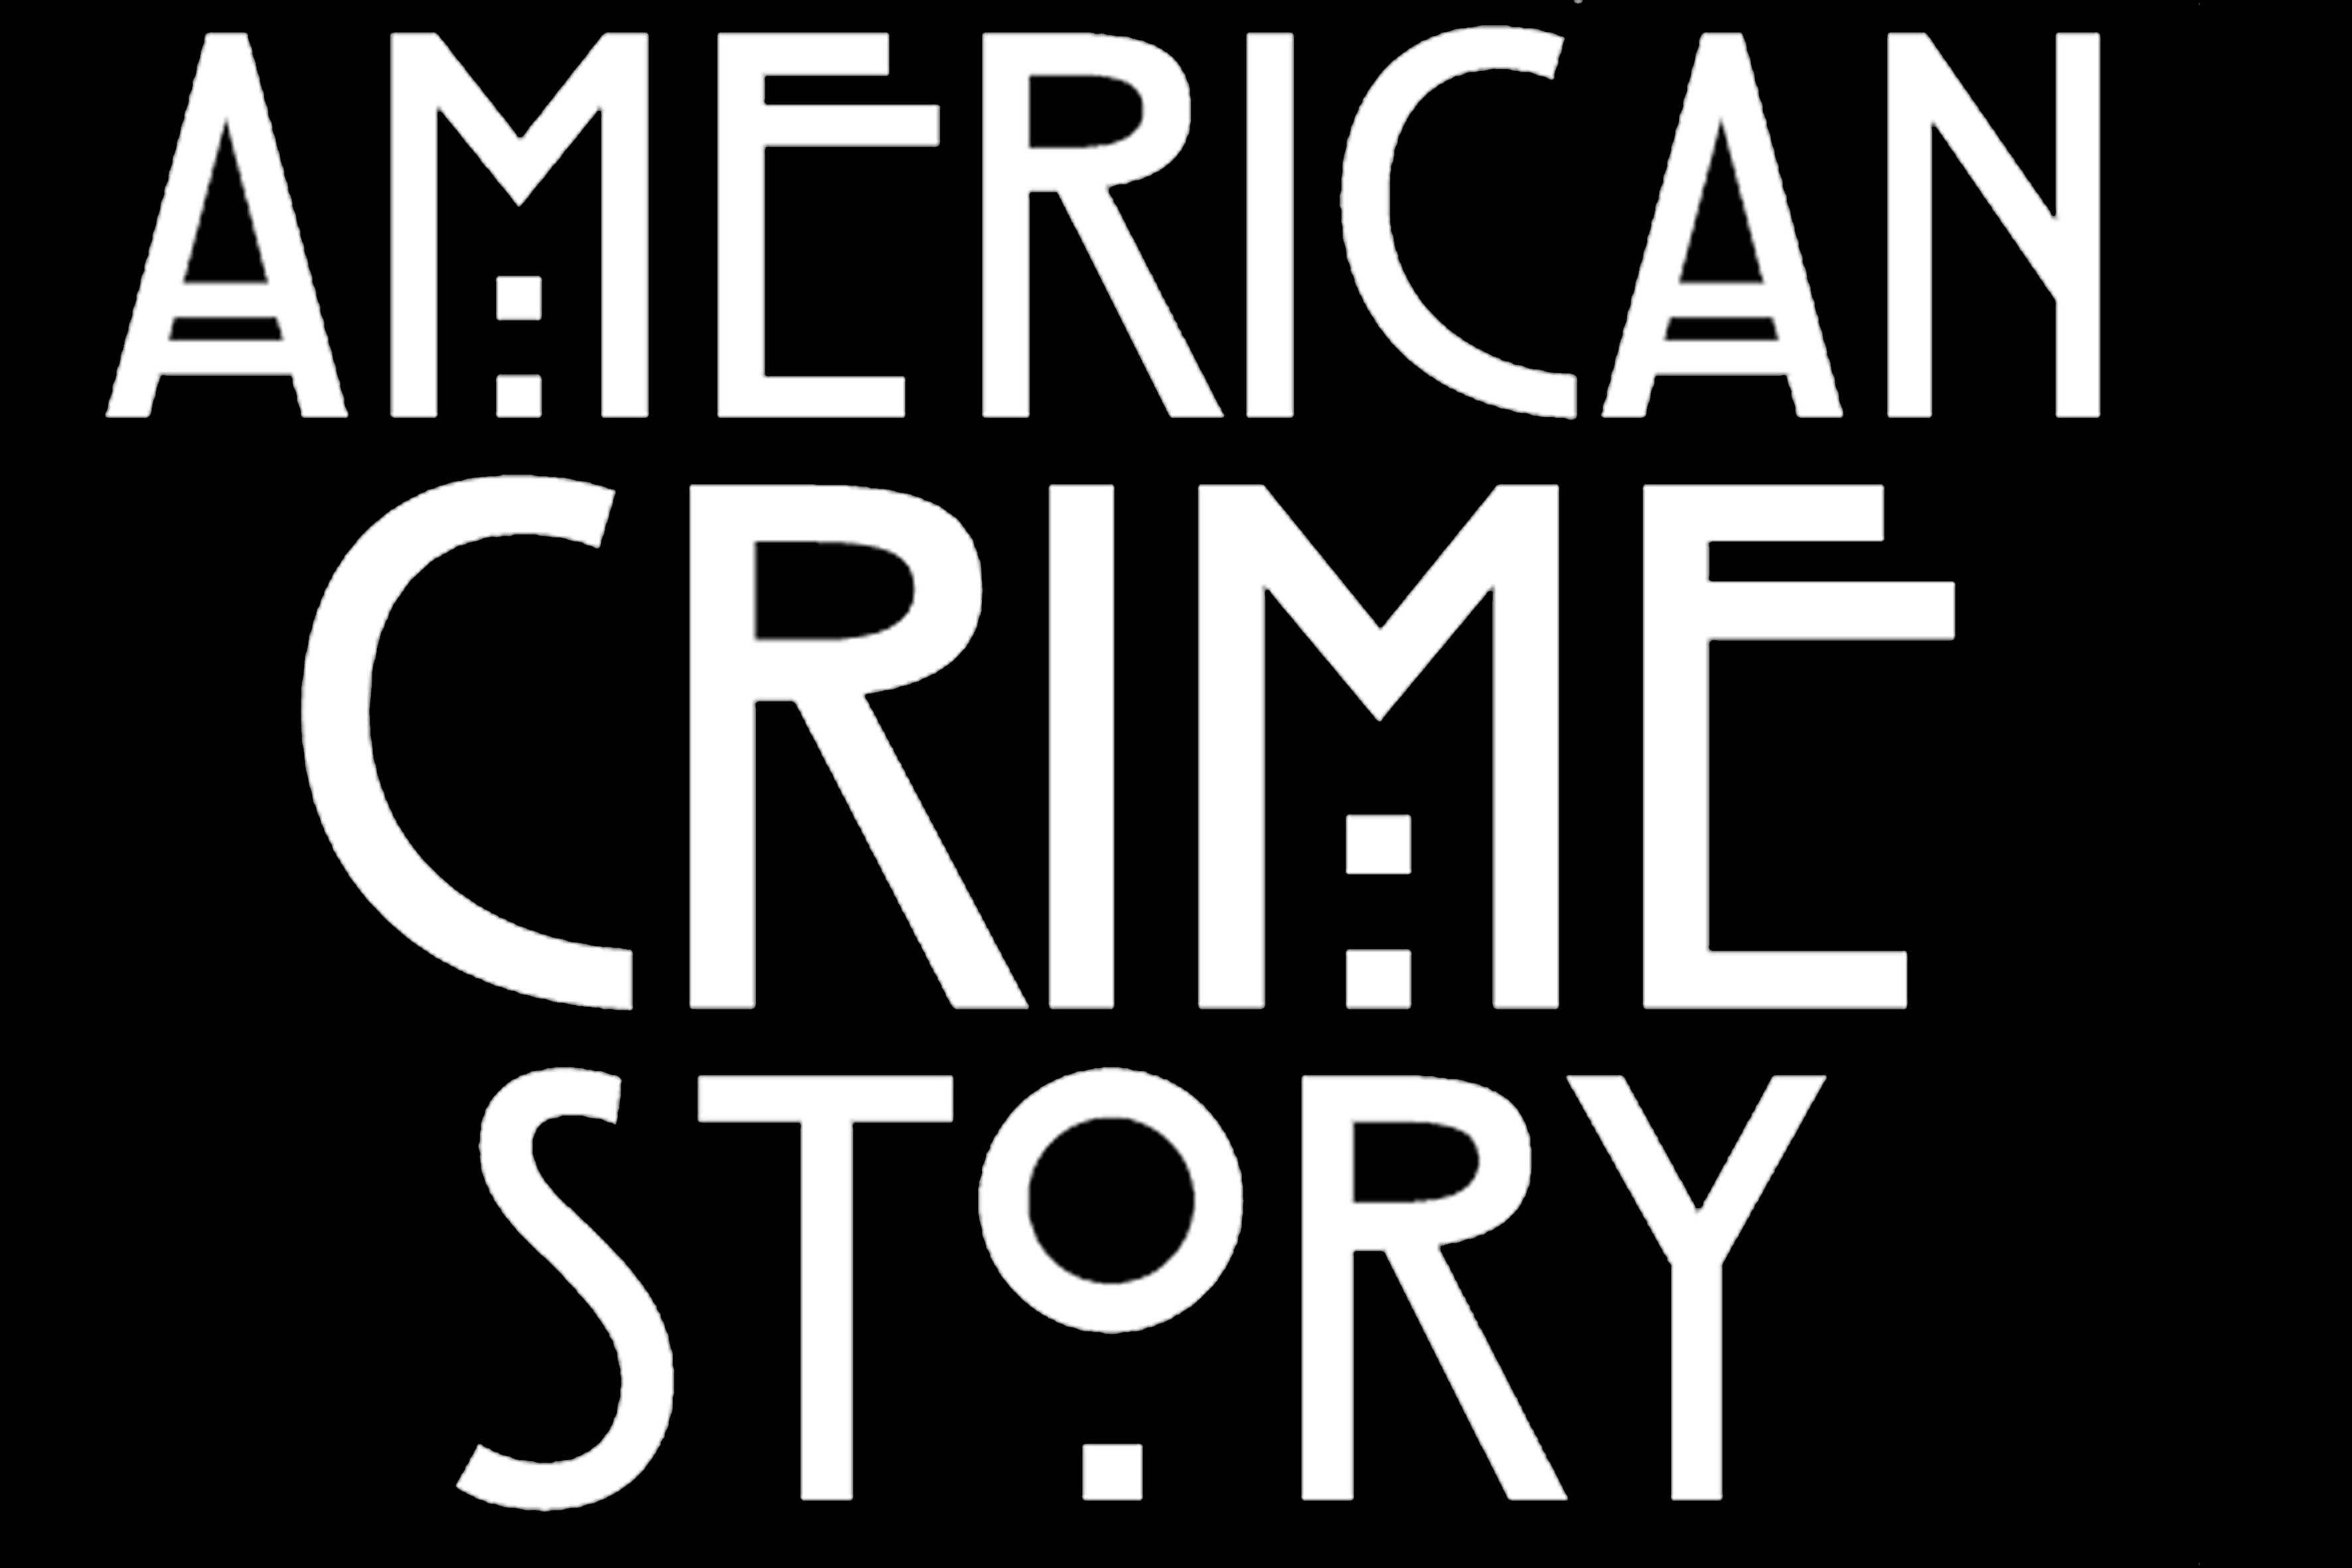 American Crime Wallpapers